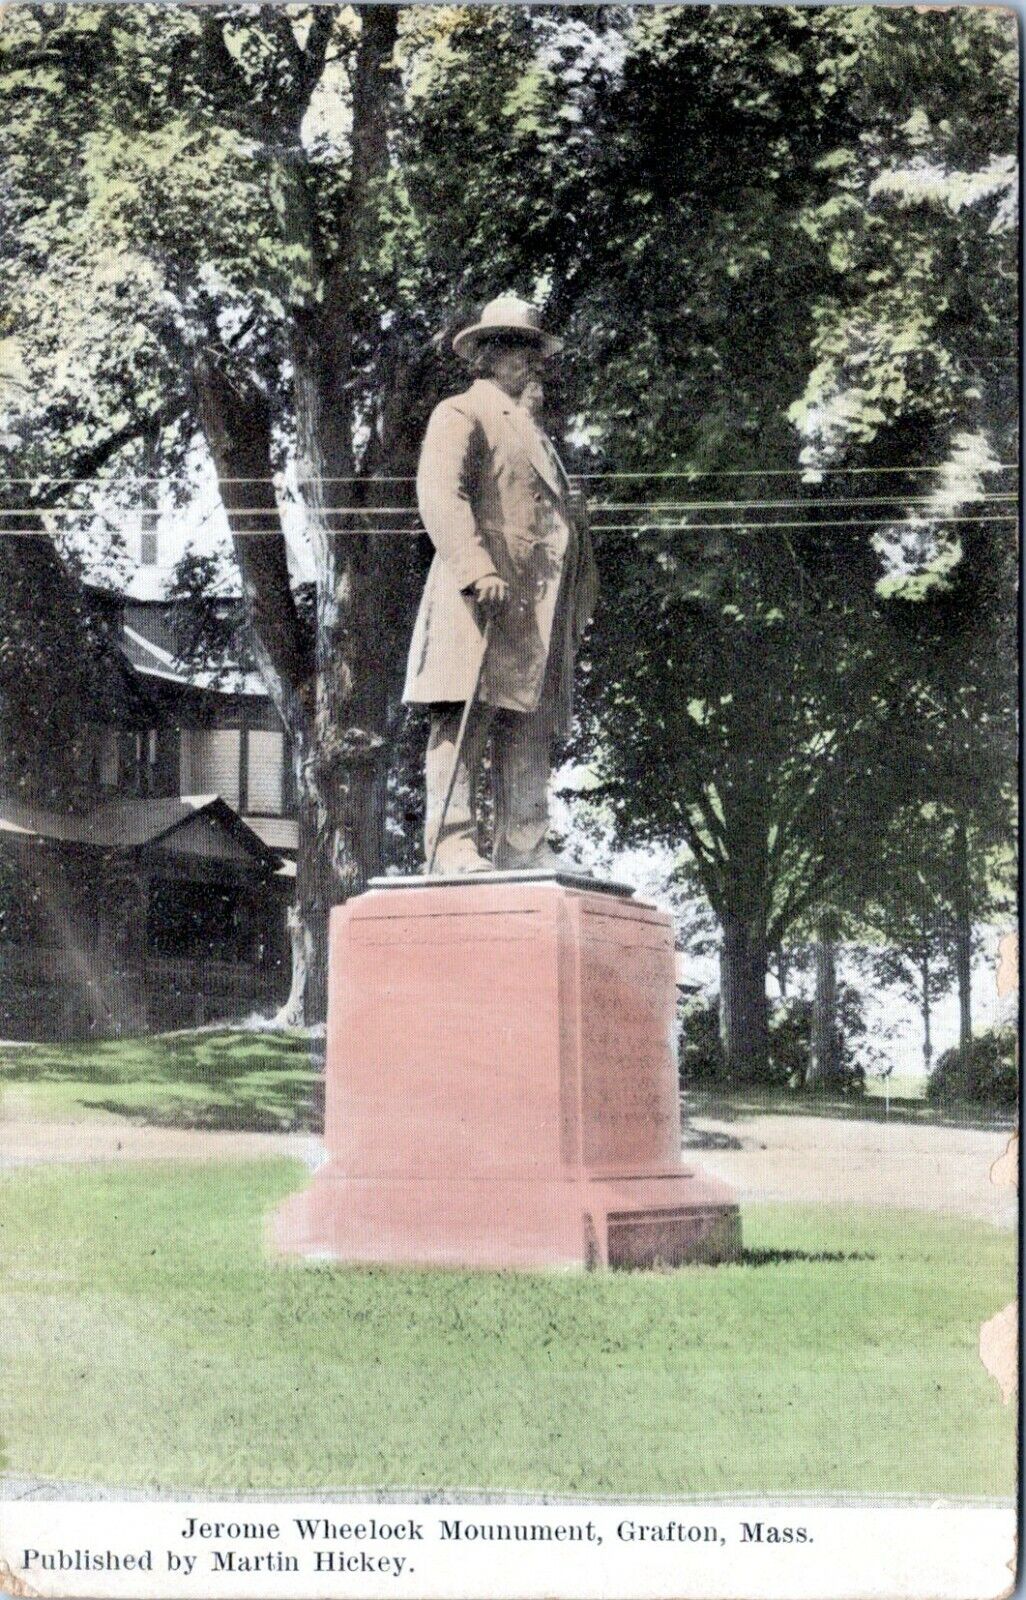 1910 GRAFTON MA Jerome Wheelock Monument Statue Postcard EH